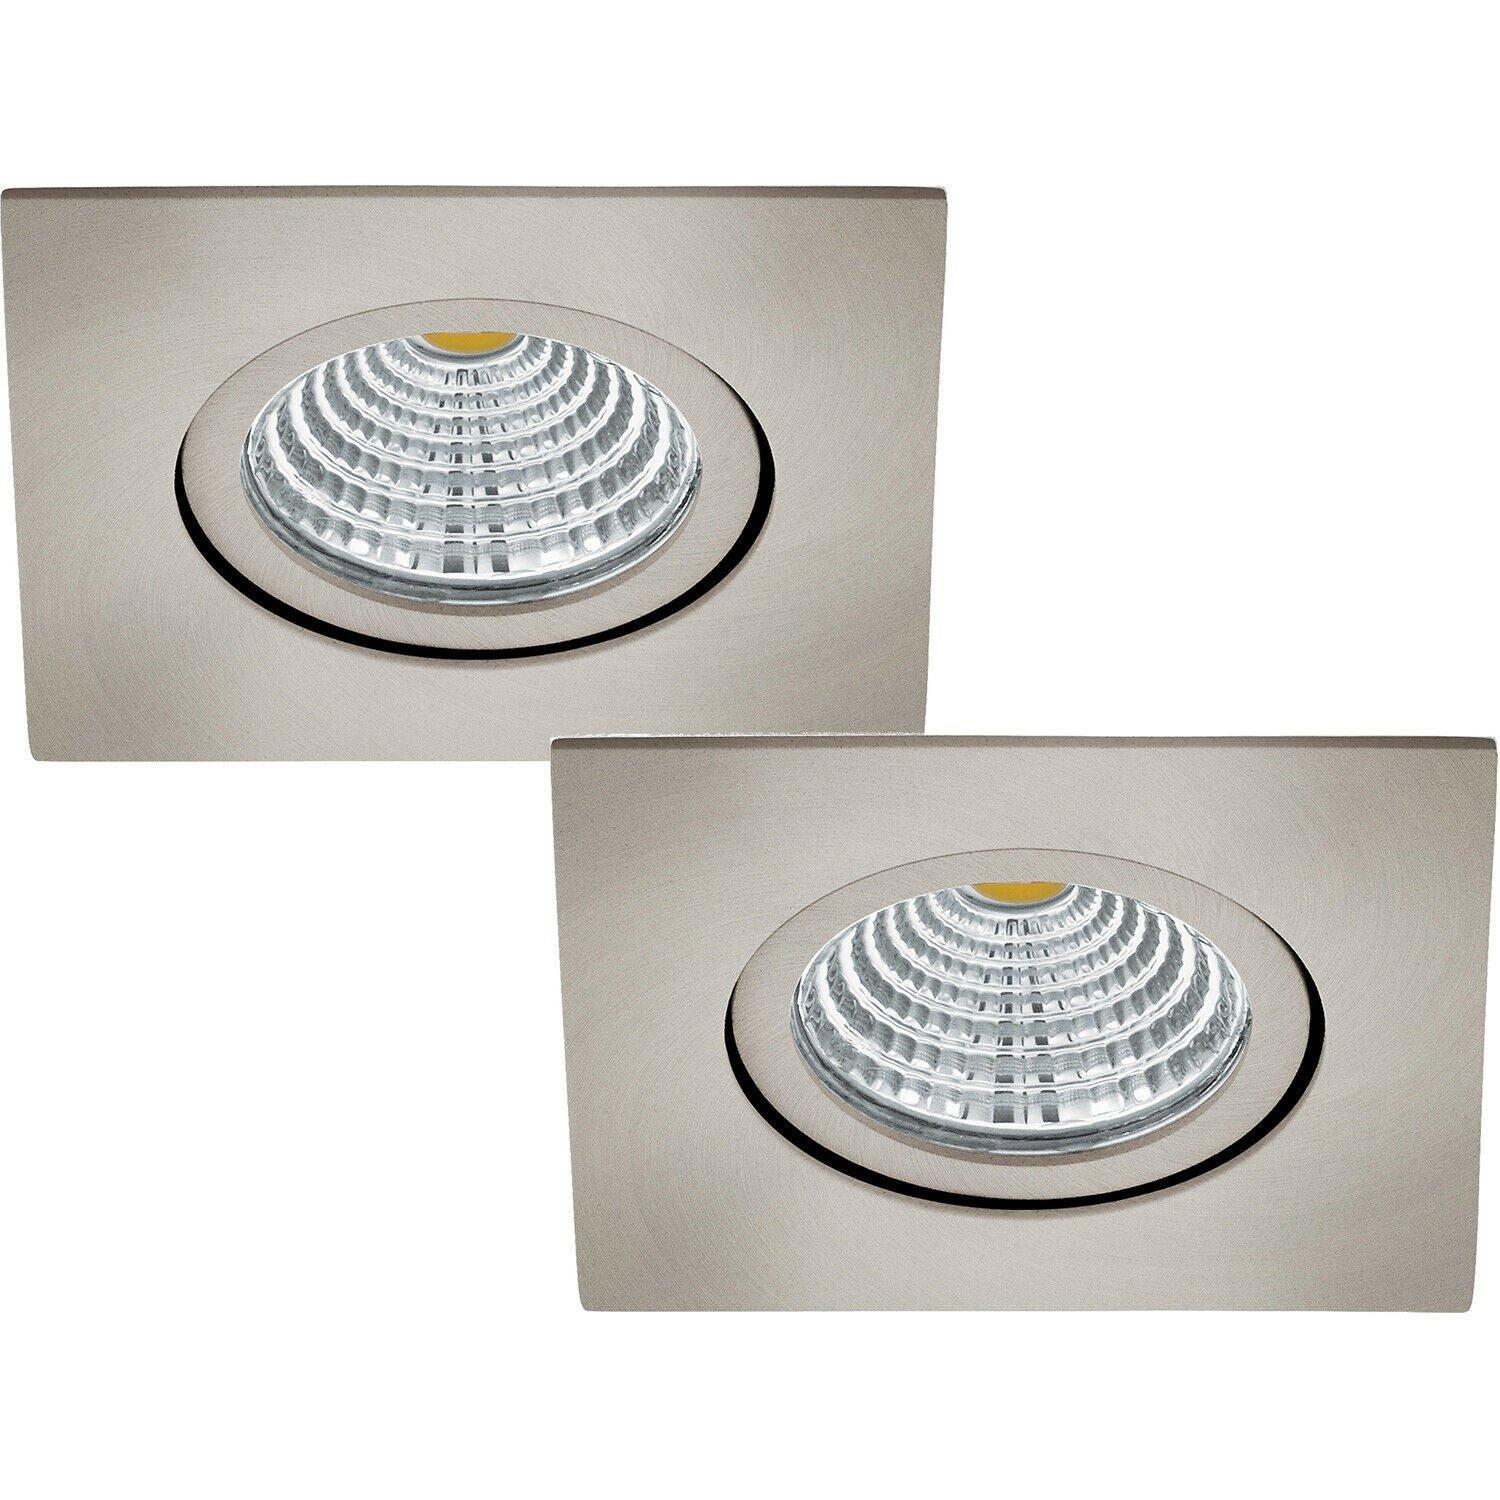 2 PACK Wall / Ceiling Recess Square Downlight Satin Nickel Spotlight 6W LED